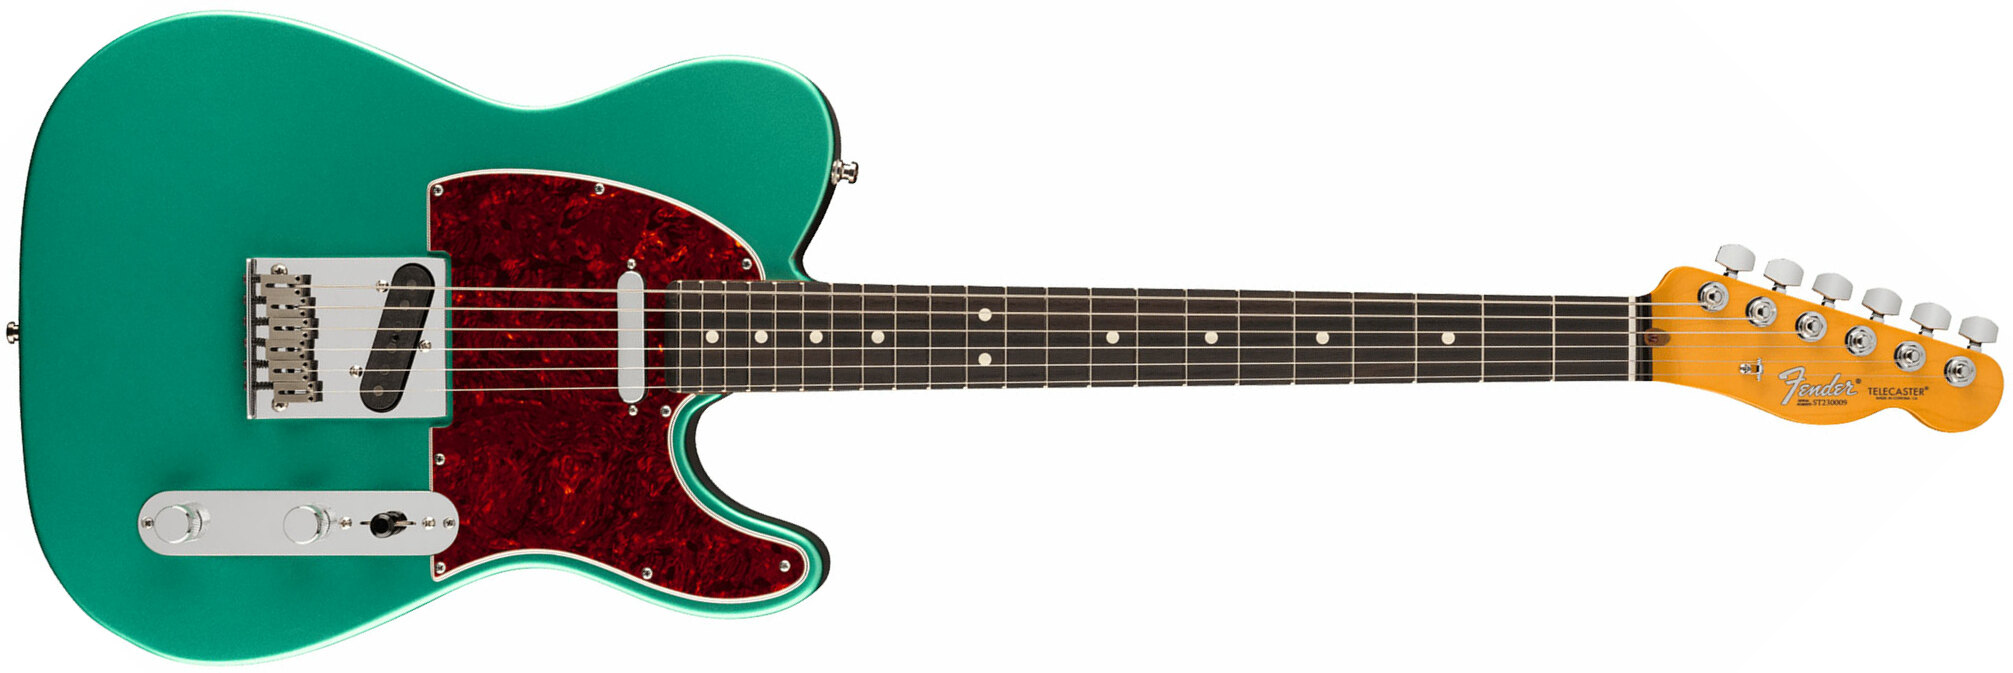 Fender Susan Tedeschi Tele Usa Signature 2s Ht Rw - Aged Caribbean Mist - Televorm elektrische gitaar - Main picture